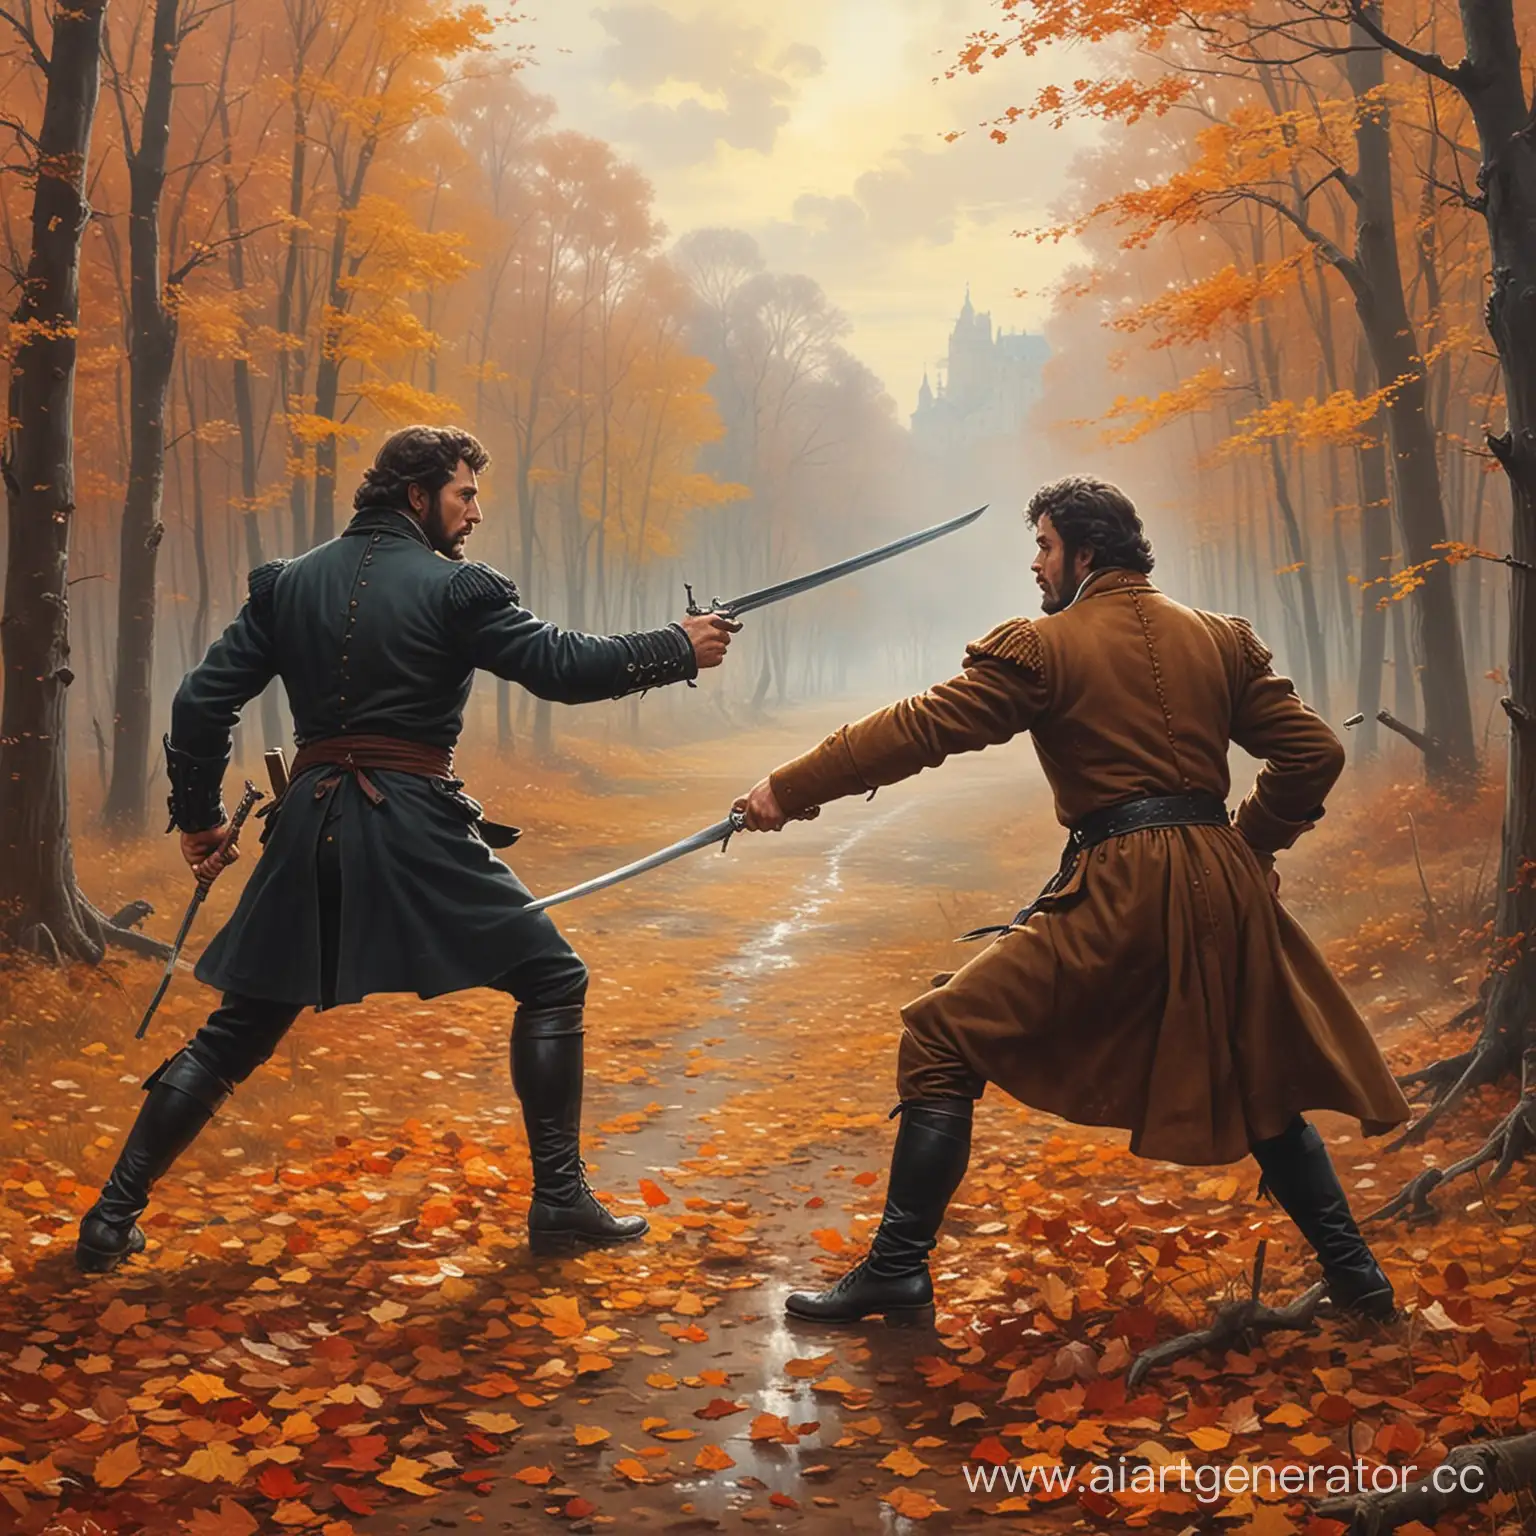 Epic-Duel-between-Pushkin-and-Dantes-in-Autumn-Setting